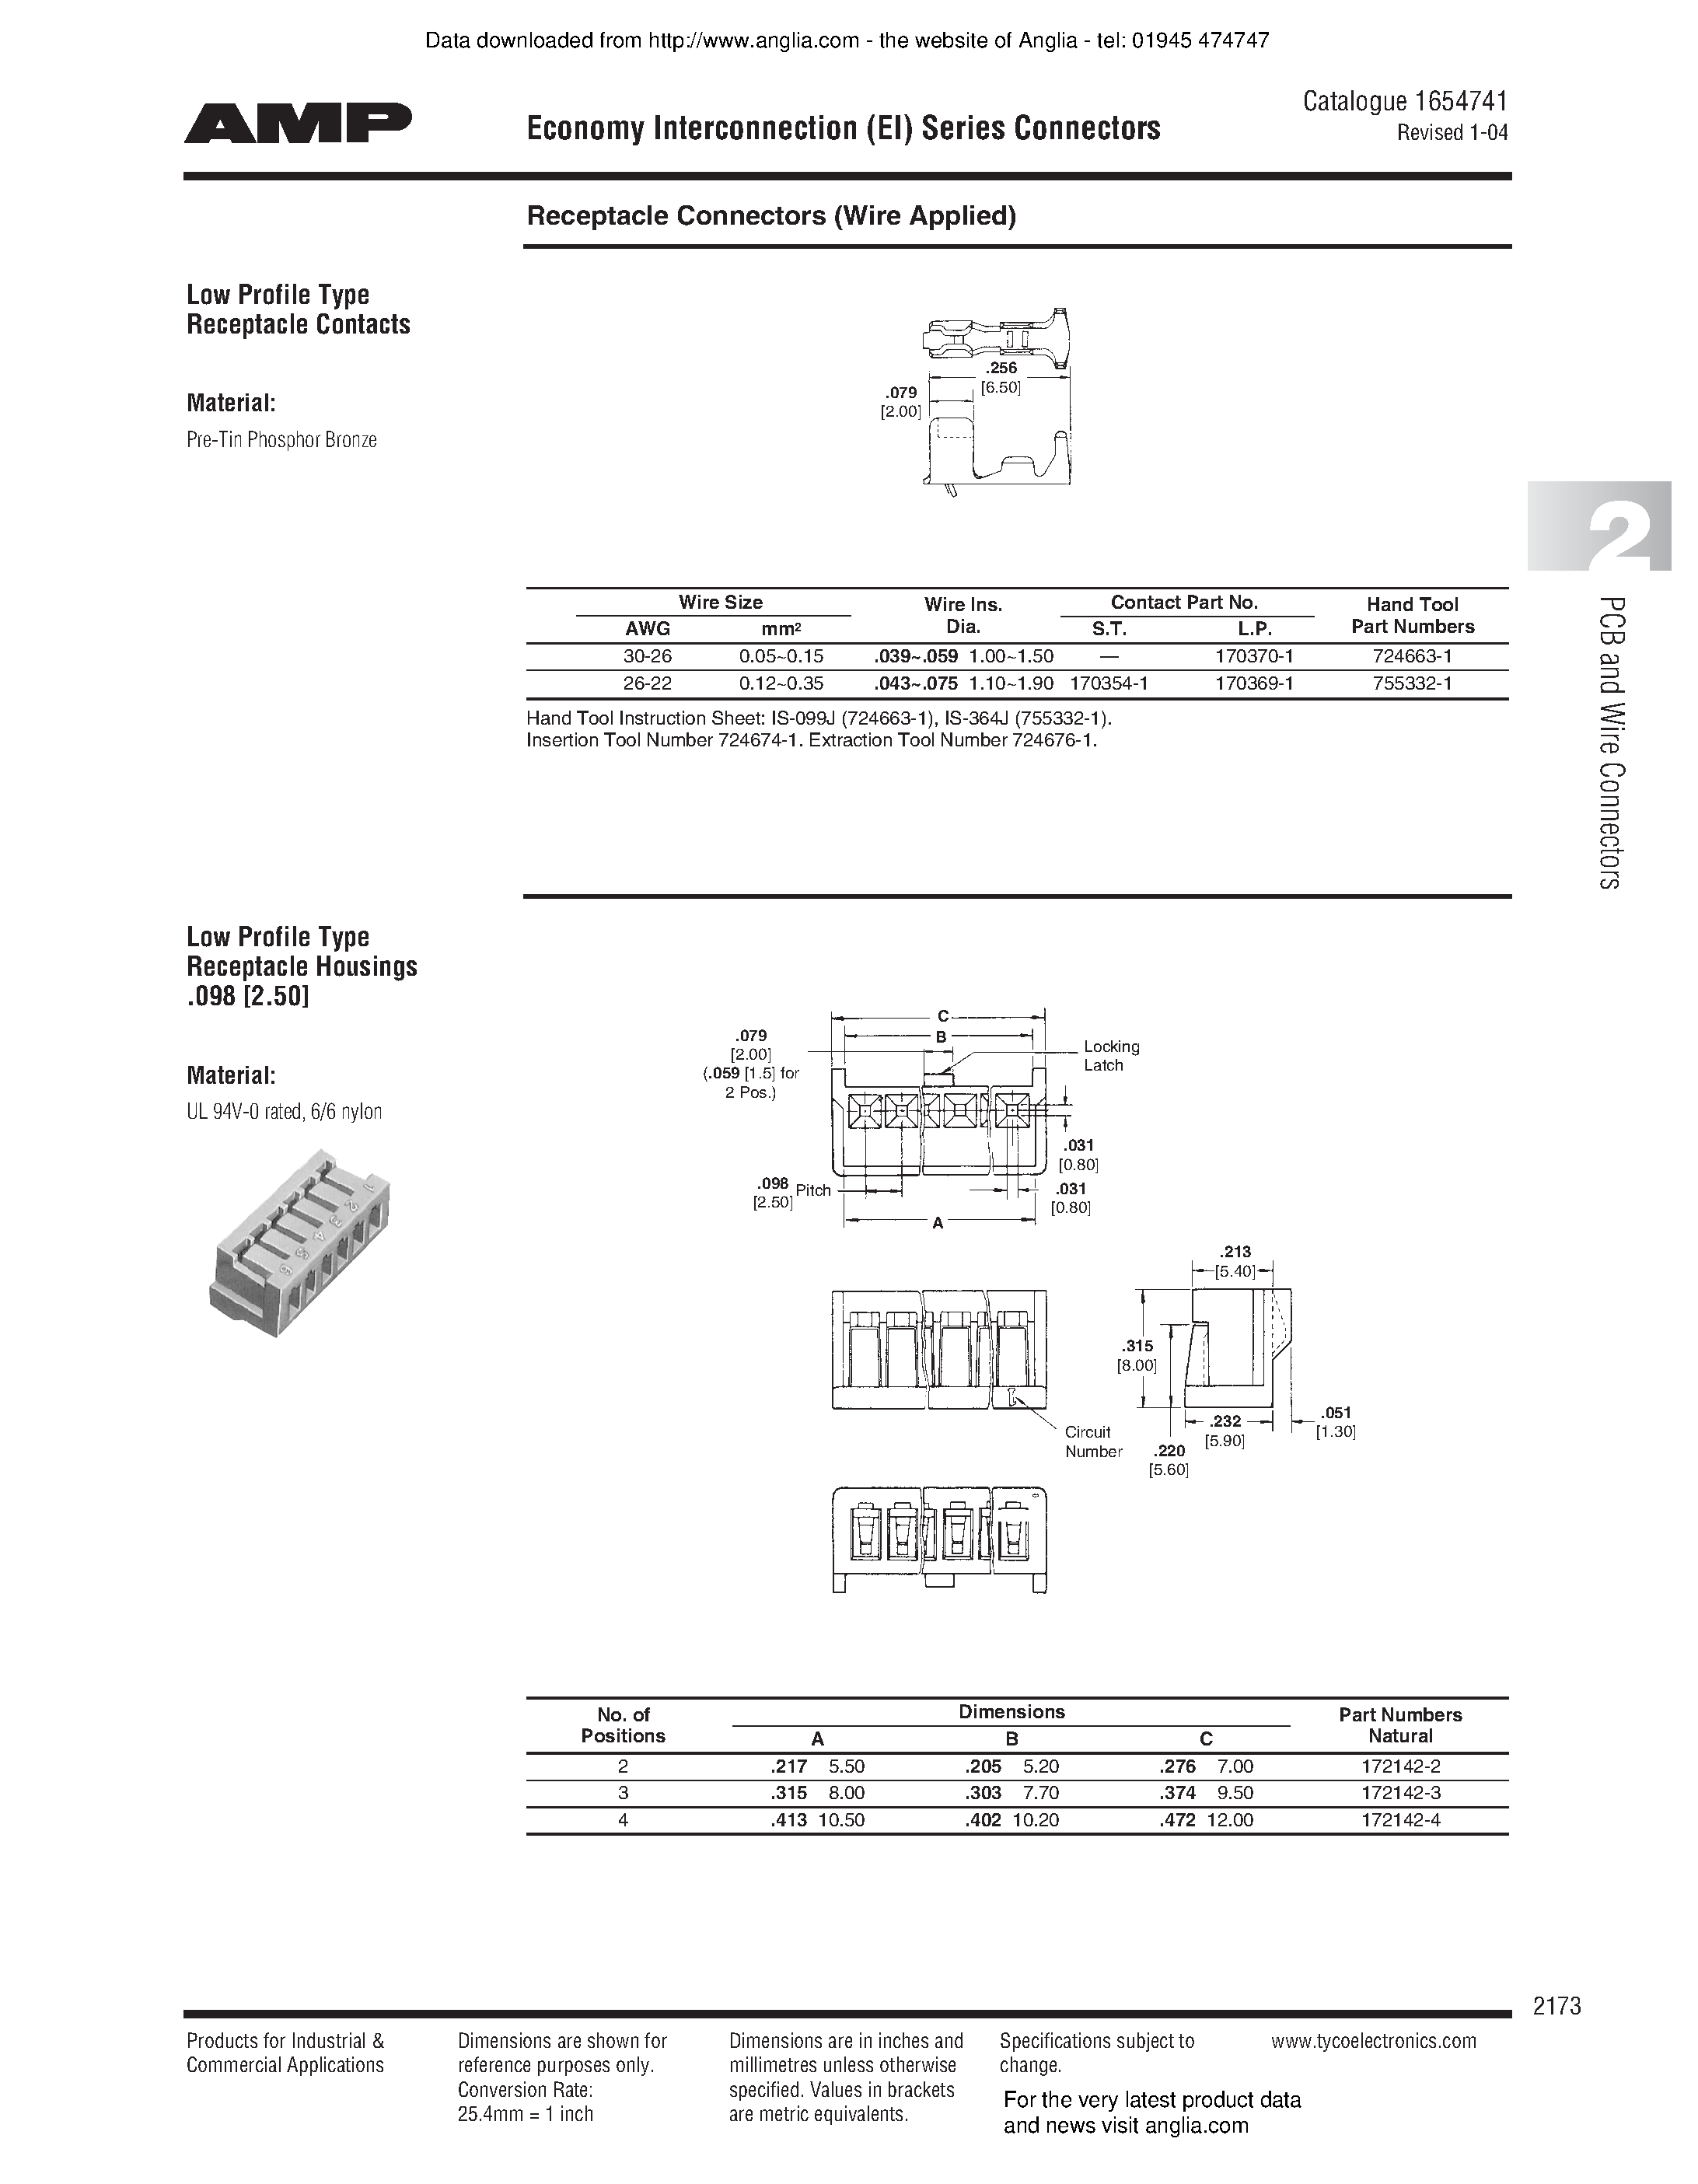 Datasheet 171822-x - Economy Interconnection Series page 2